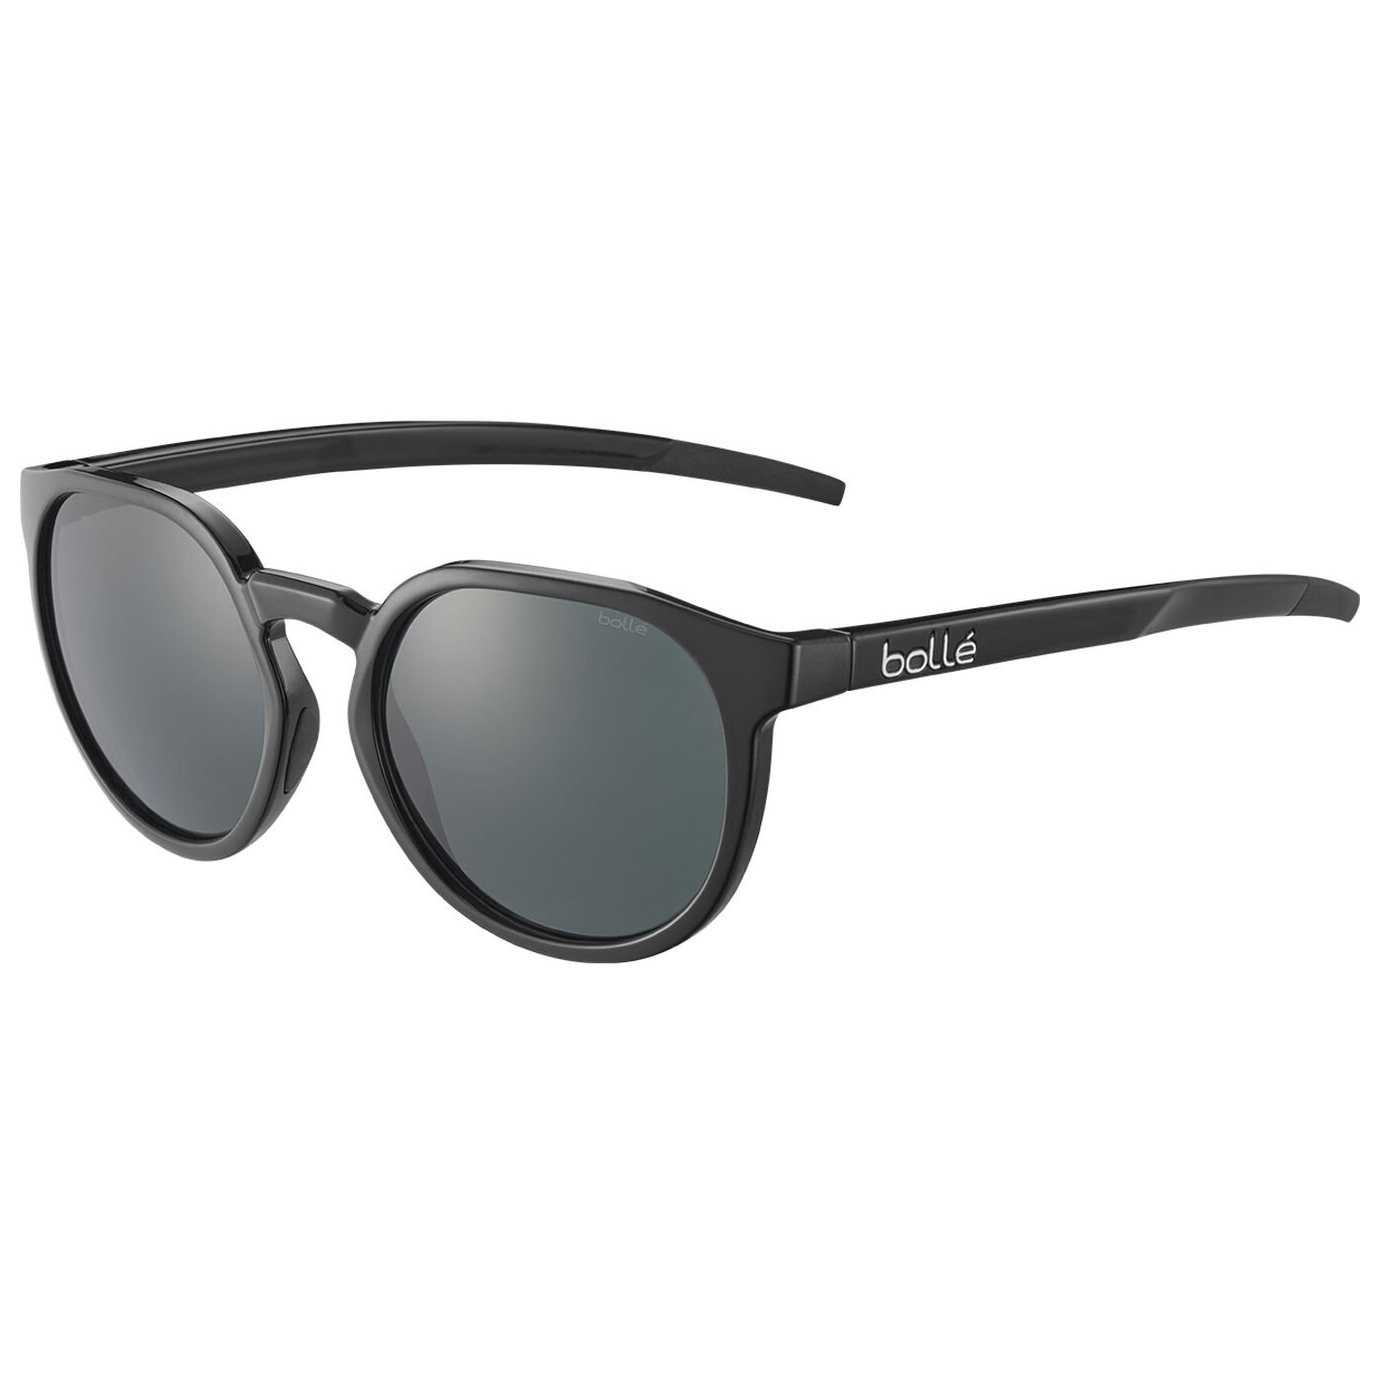 Солнцезащитные очки Bollé Merit S3 (VLT 11%), цвет Black Shiny цена и фото